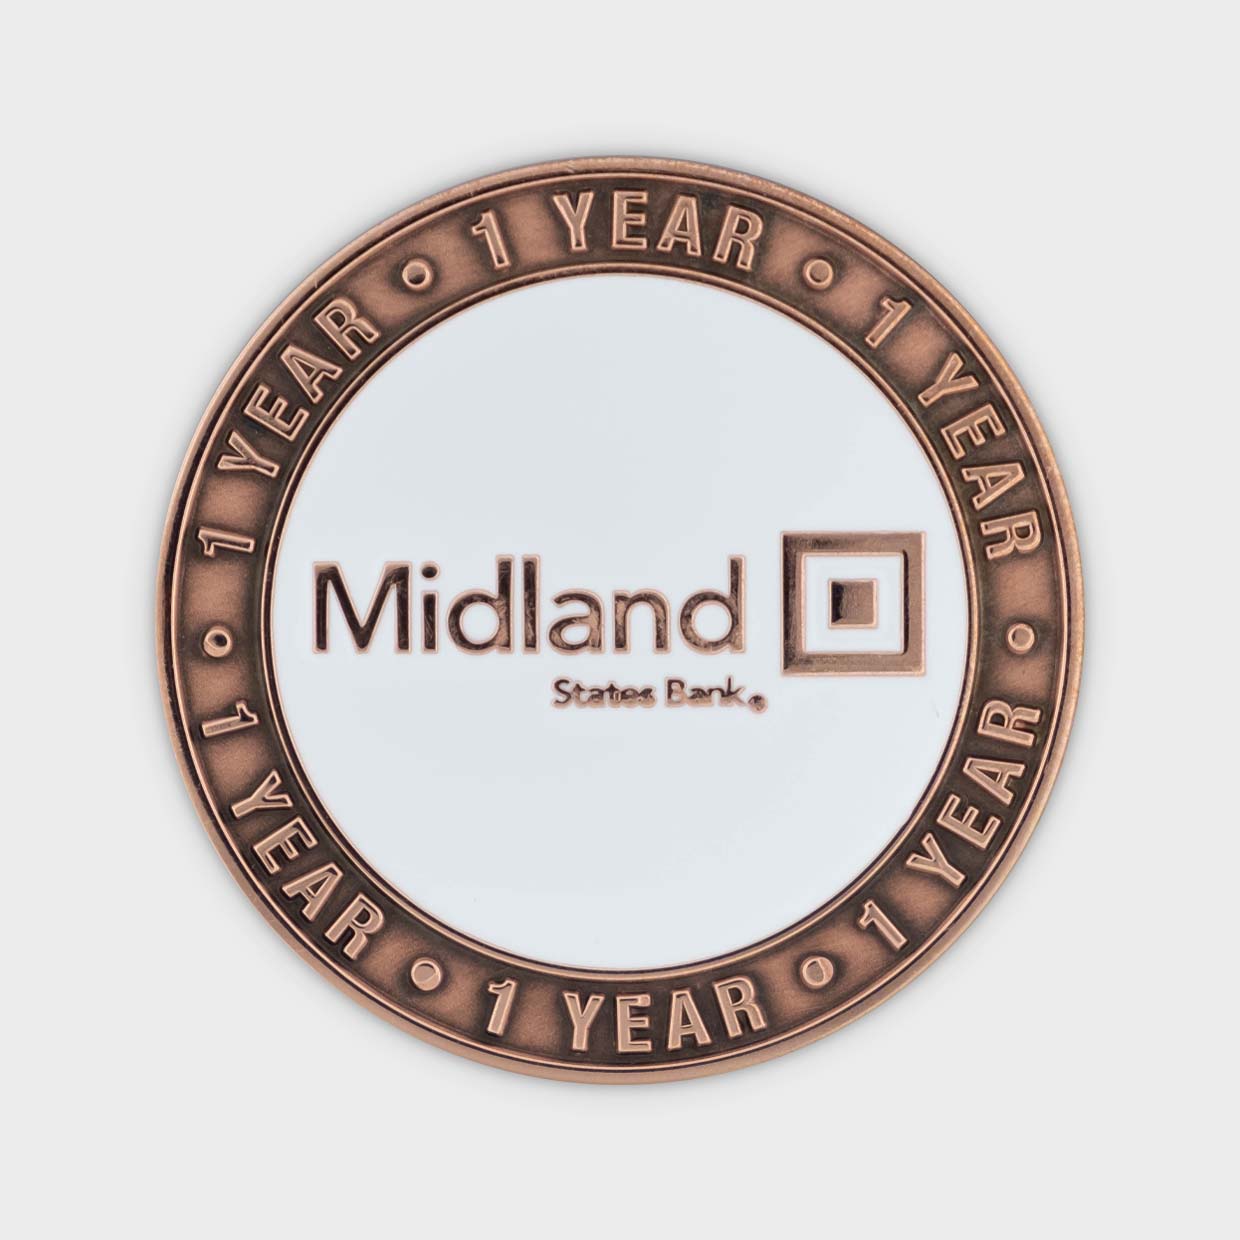 One Midland Medallion Reverse